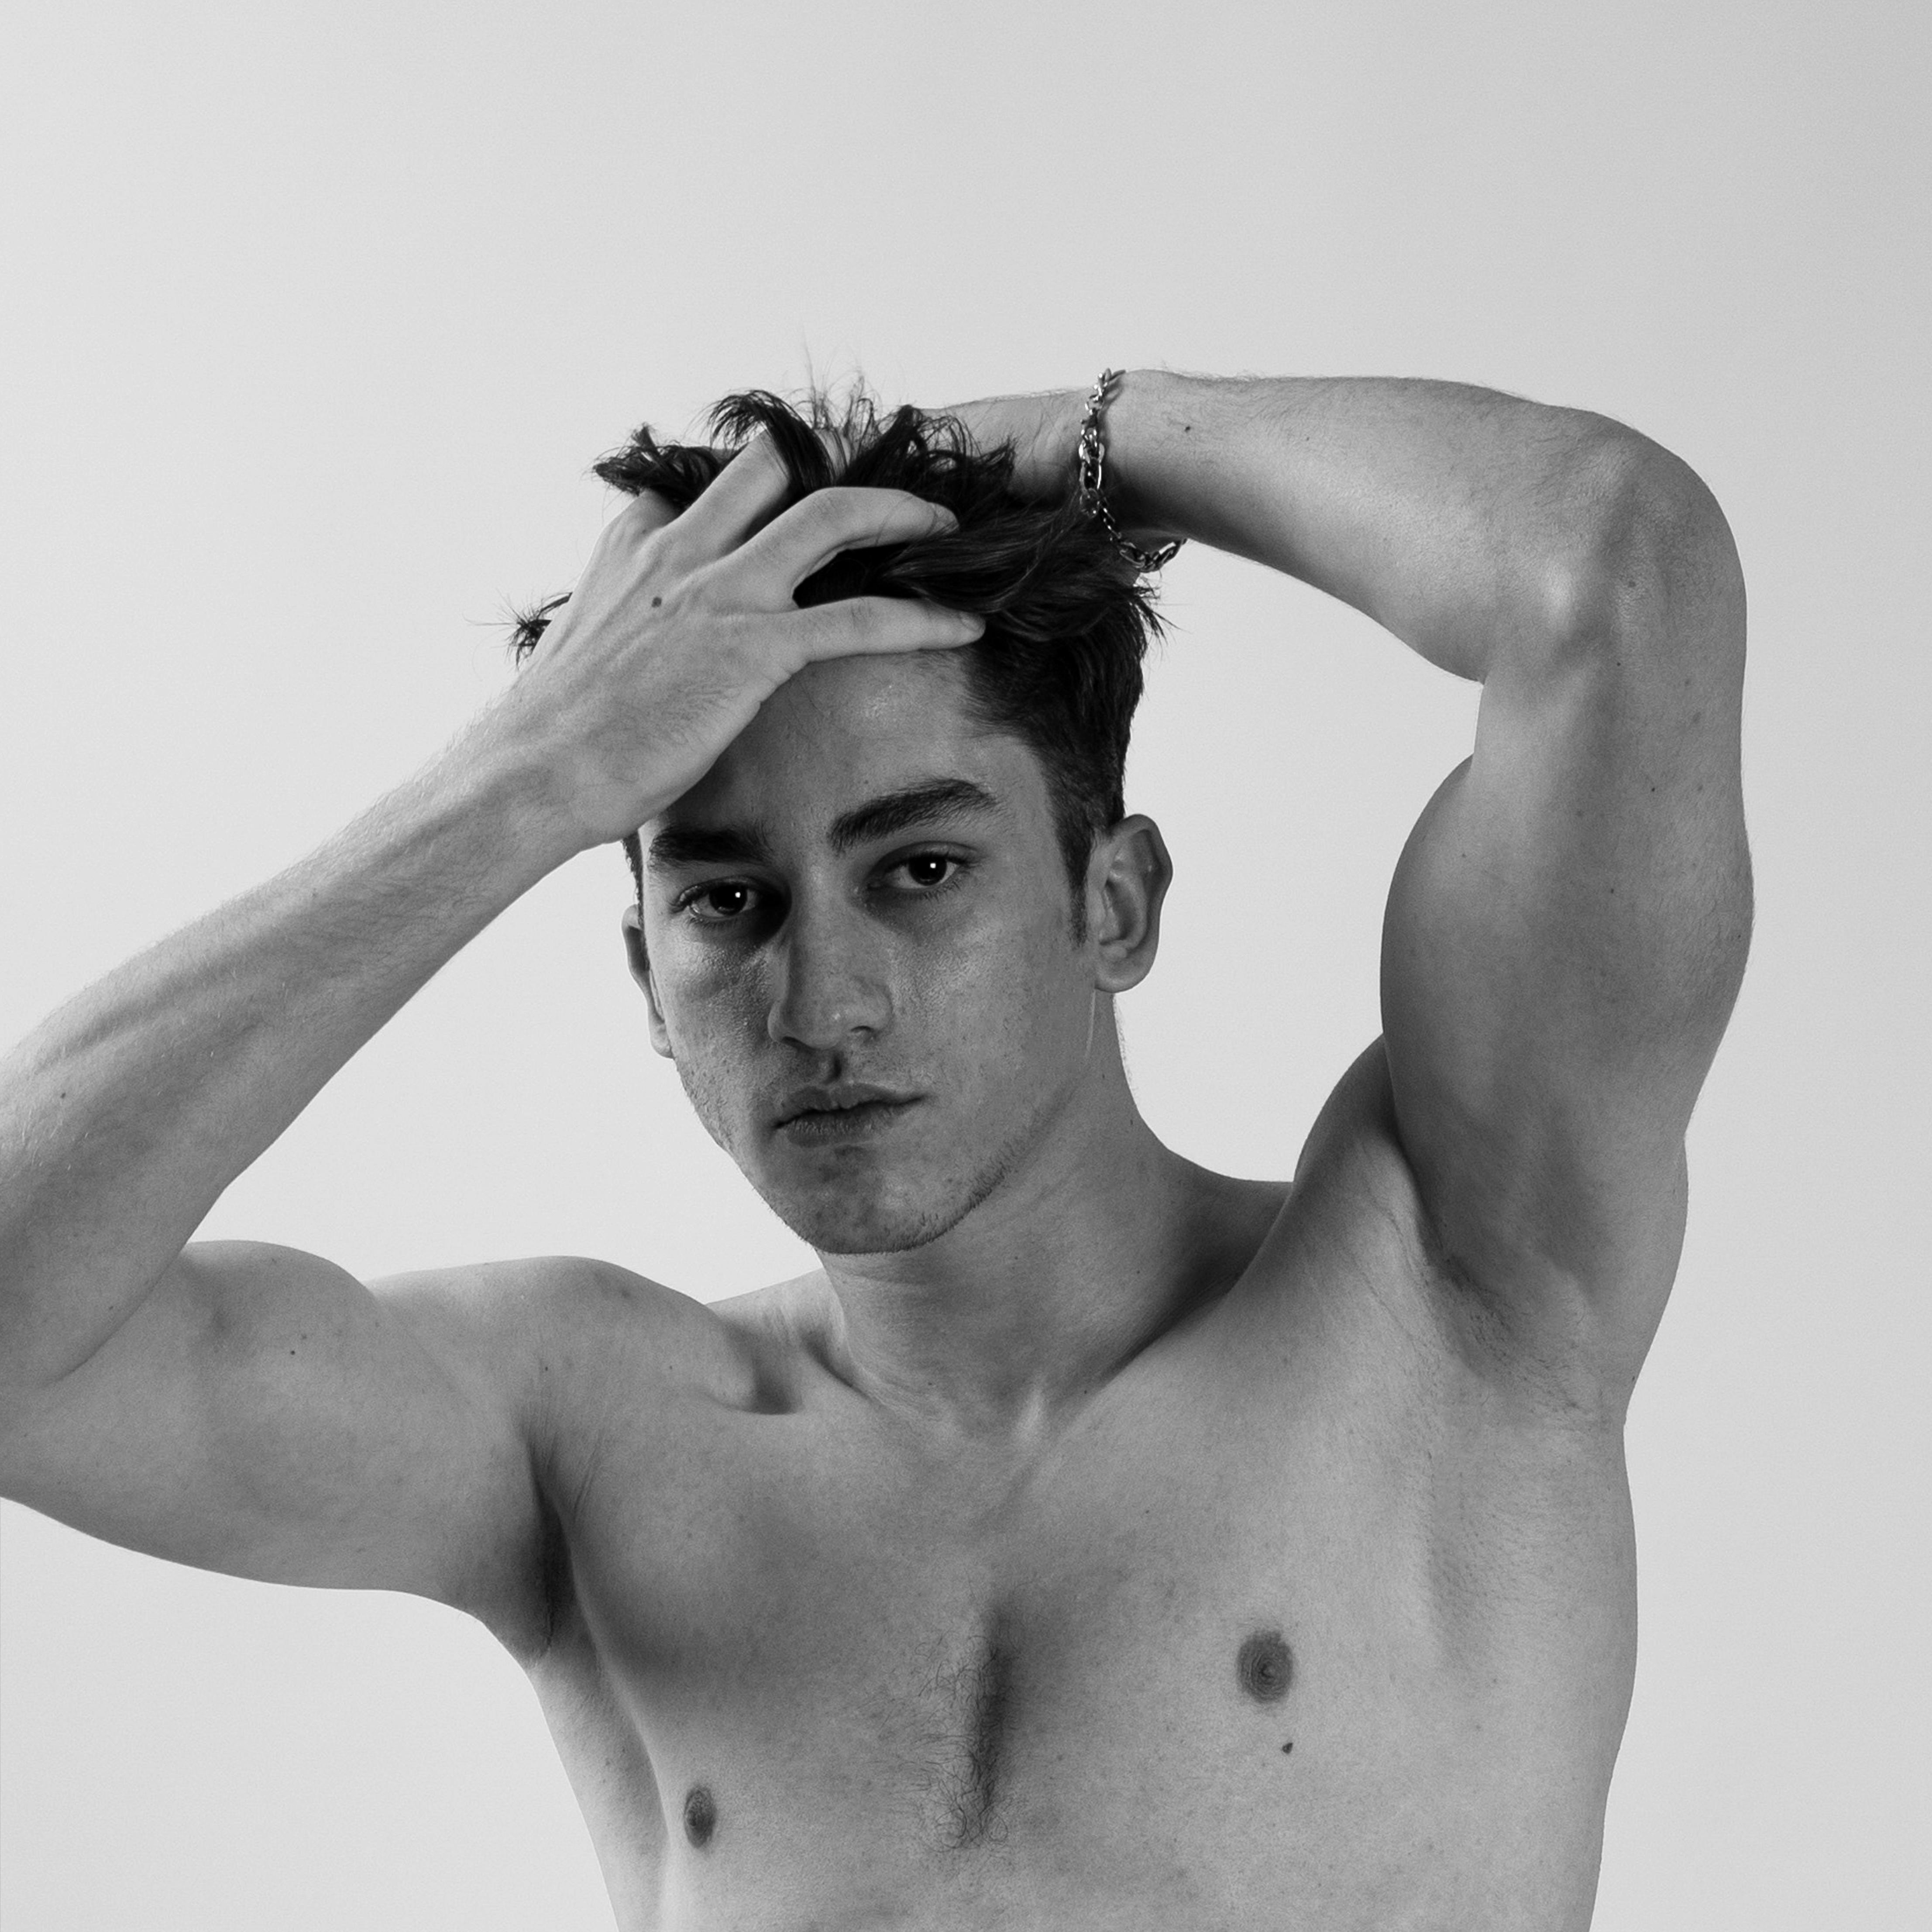 Self assured shirtless muscular man touching hair and looking at camera ·  Free Stock Photo